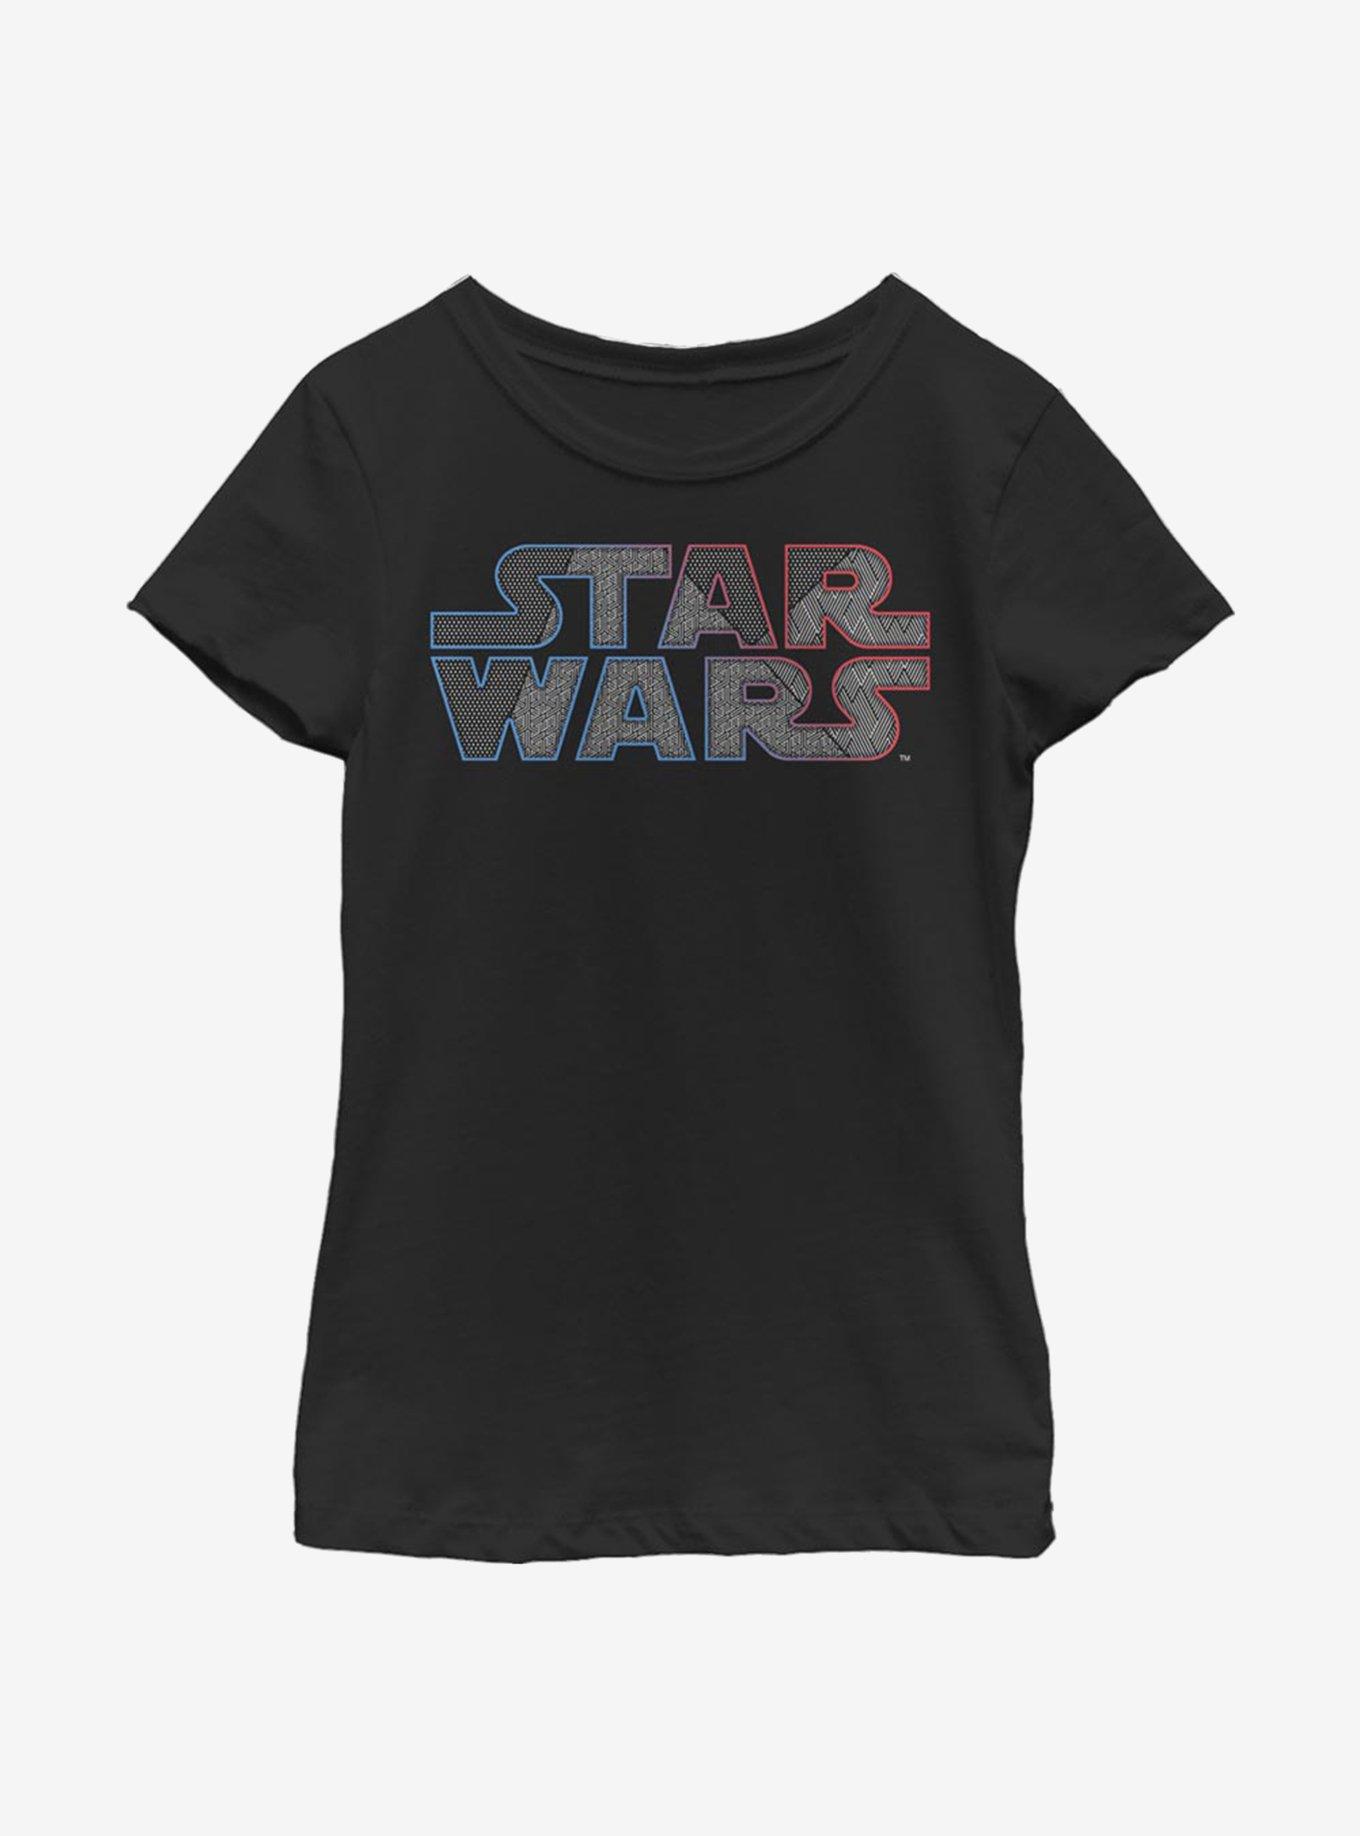 Star Wars Textured Logo Youth Girls T-Shirt, BLACK, hi-res